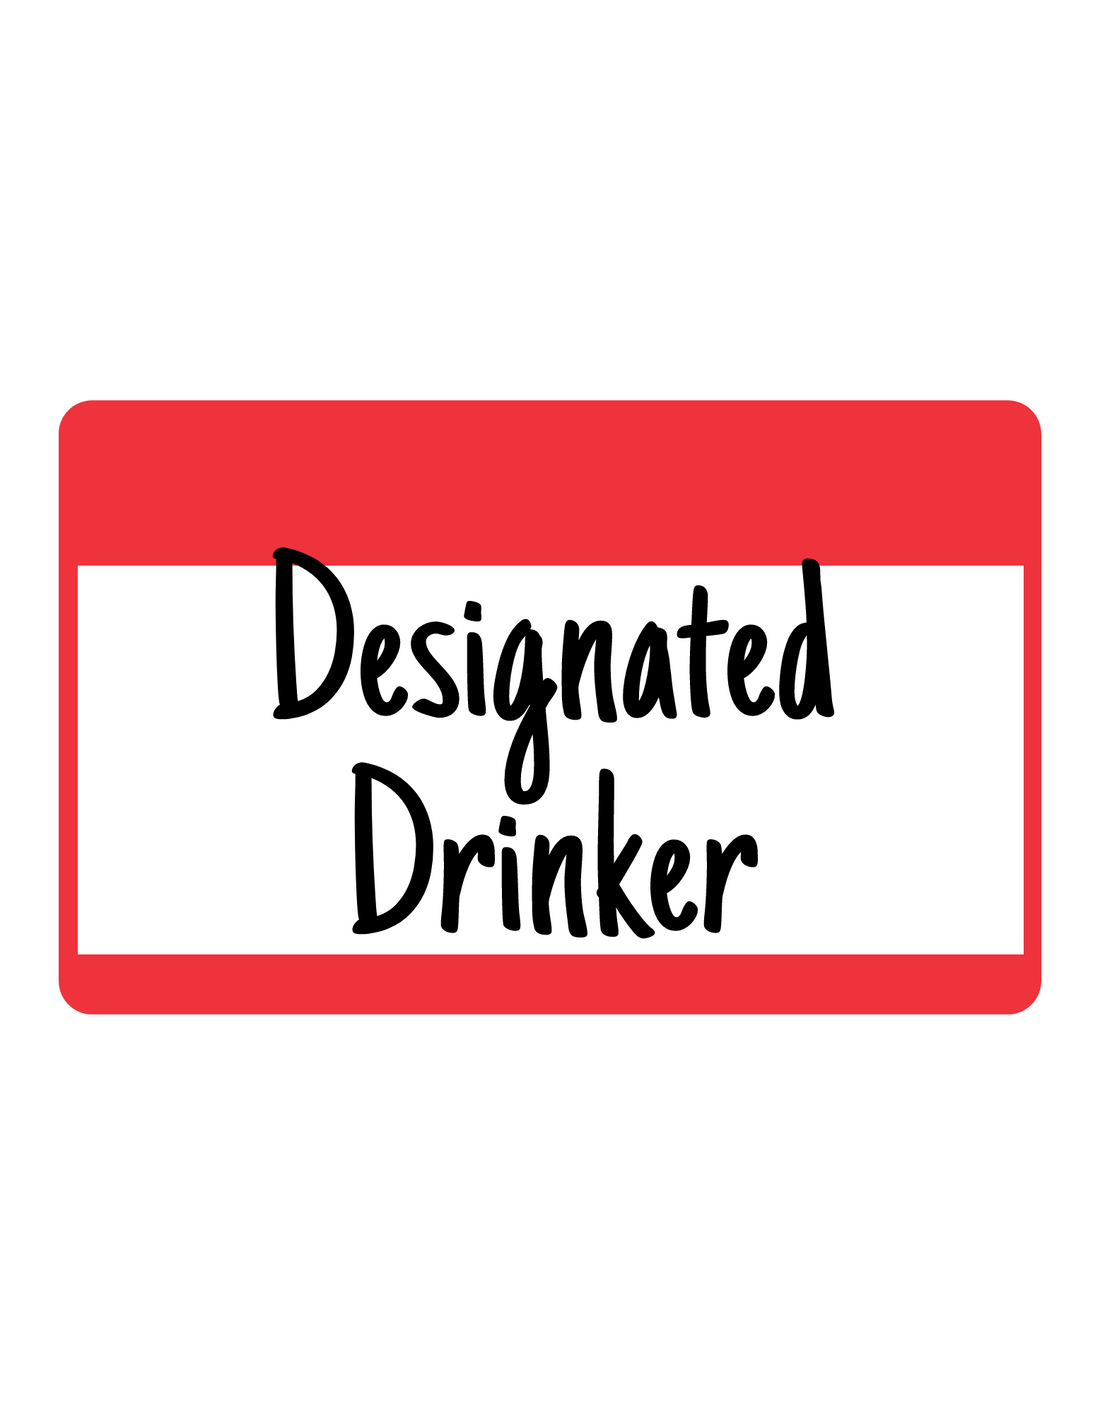 Designated Drinker